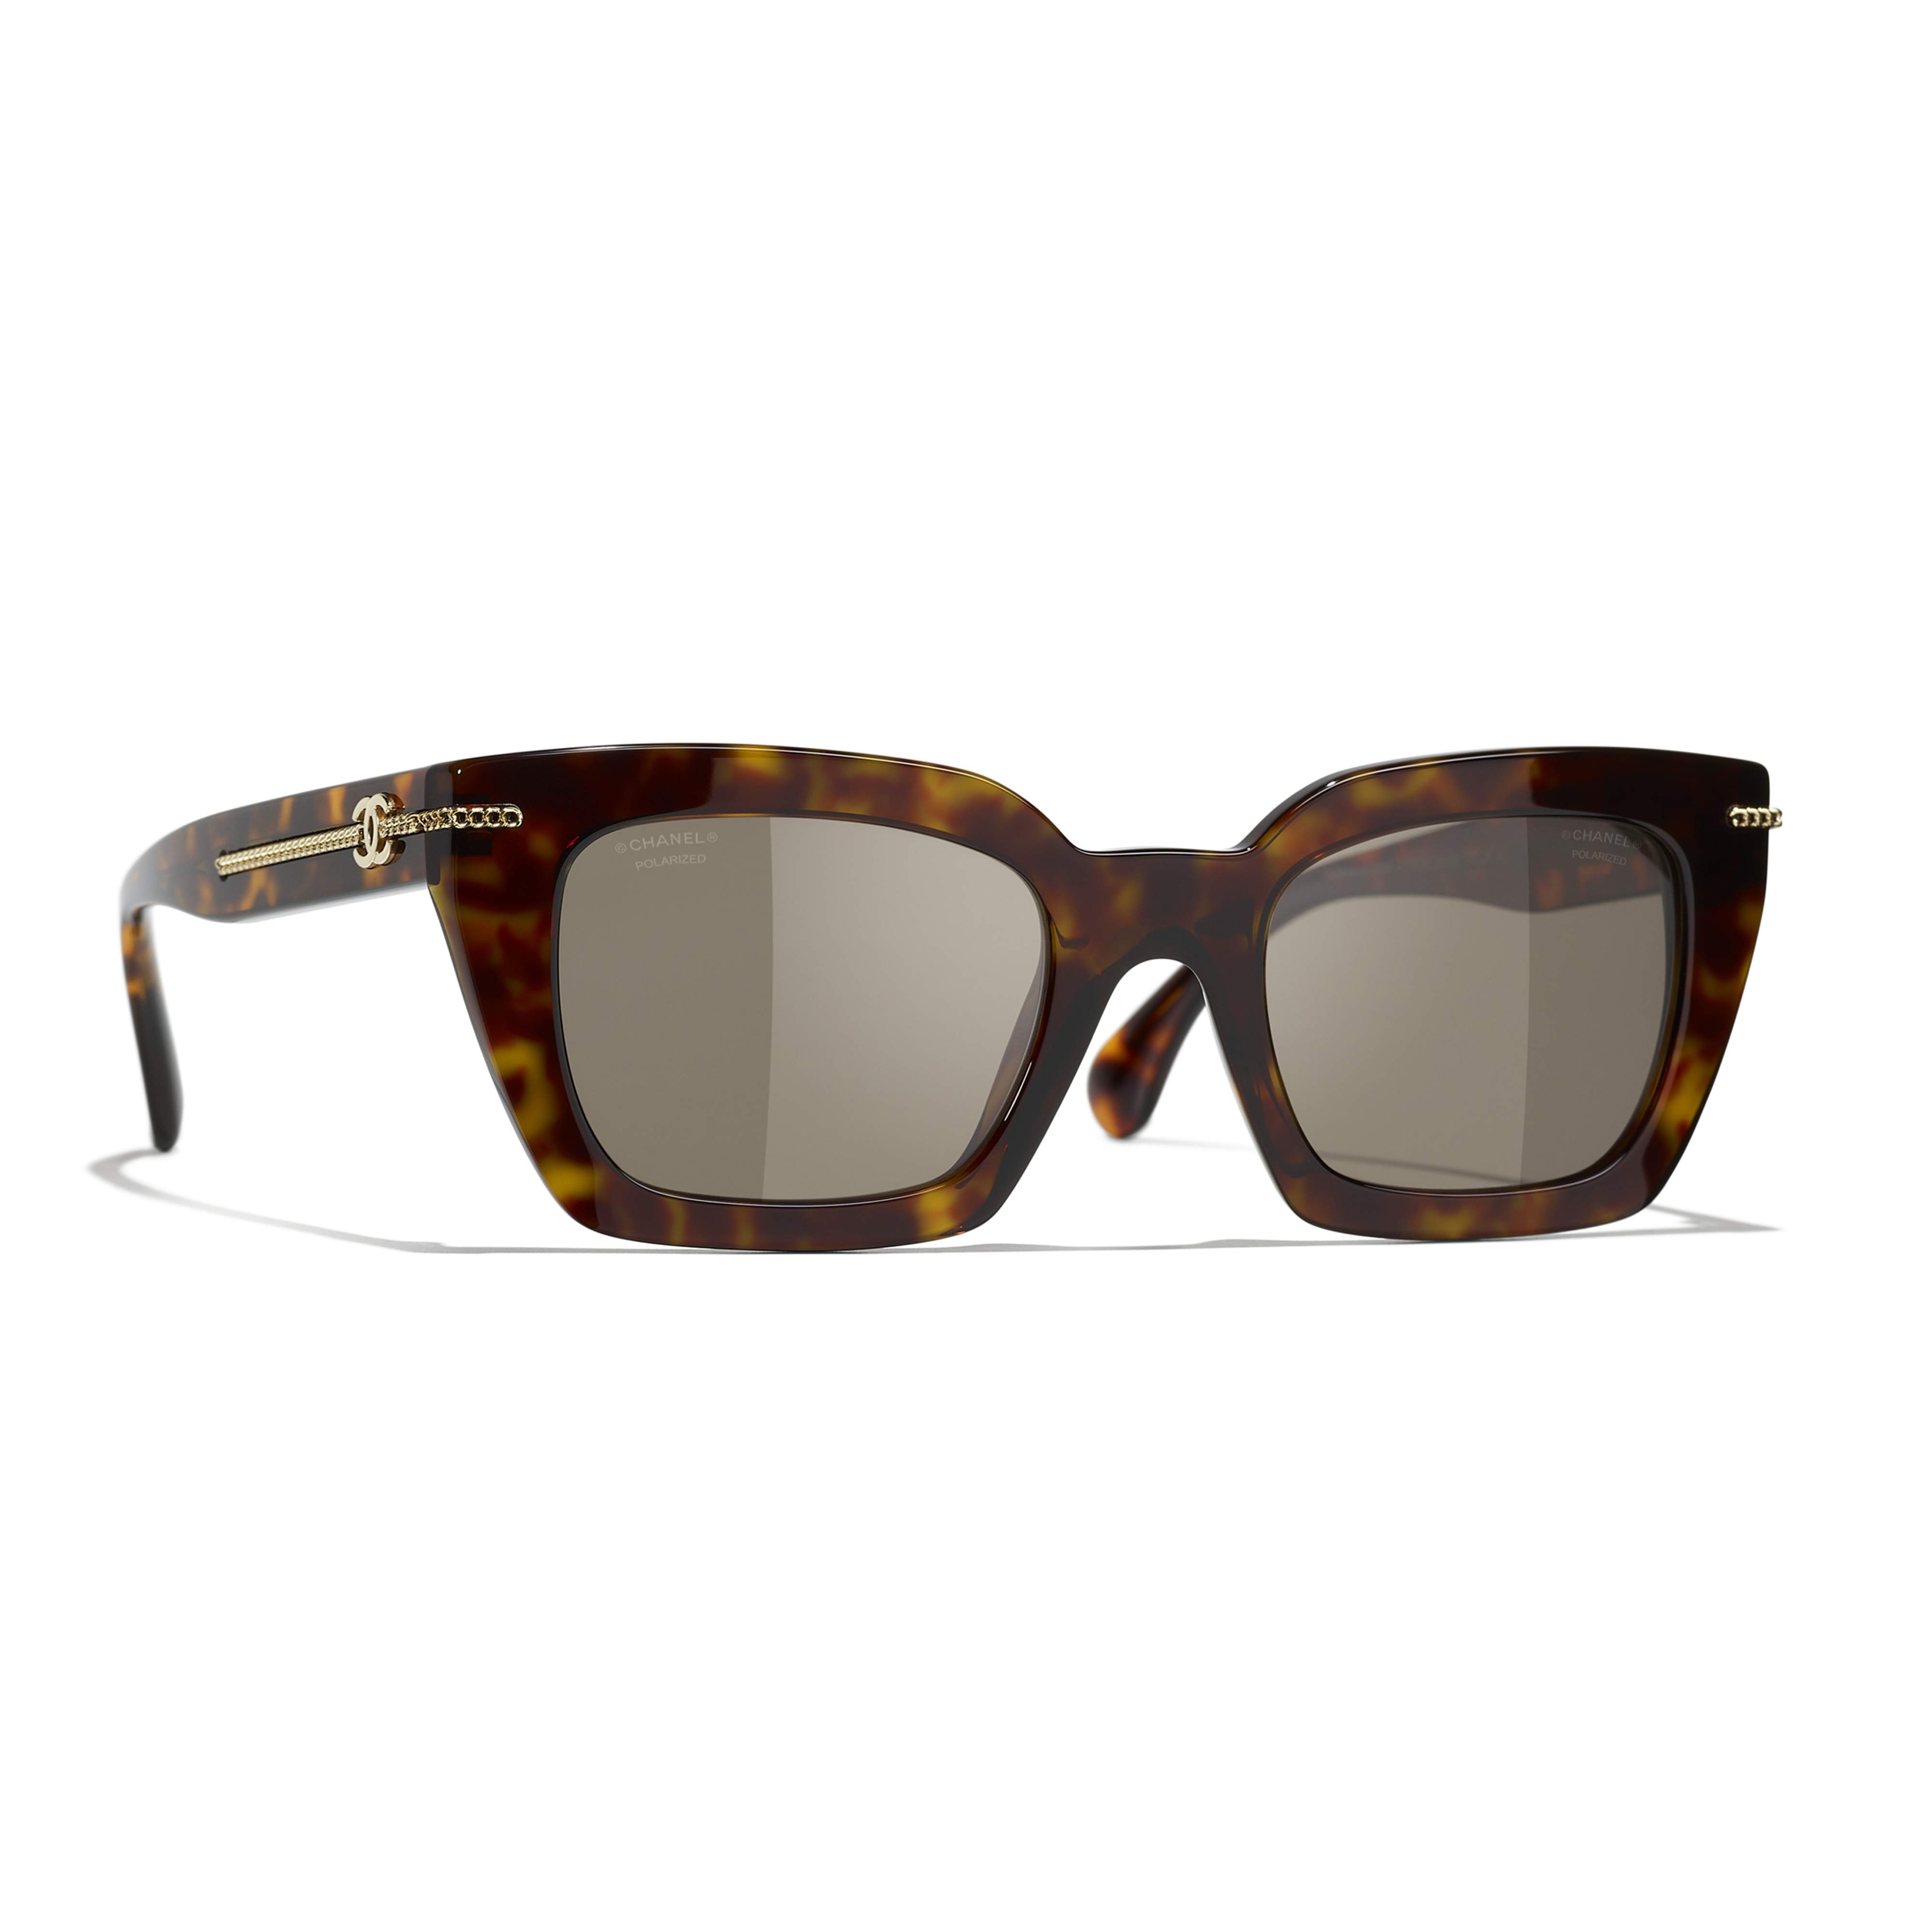 Sunglasses CHANEL CH5509 C714/83 51-22 Dark havana in stock